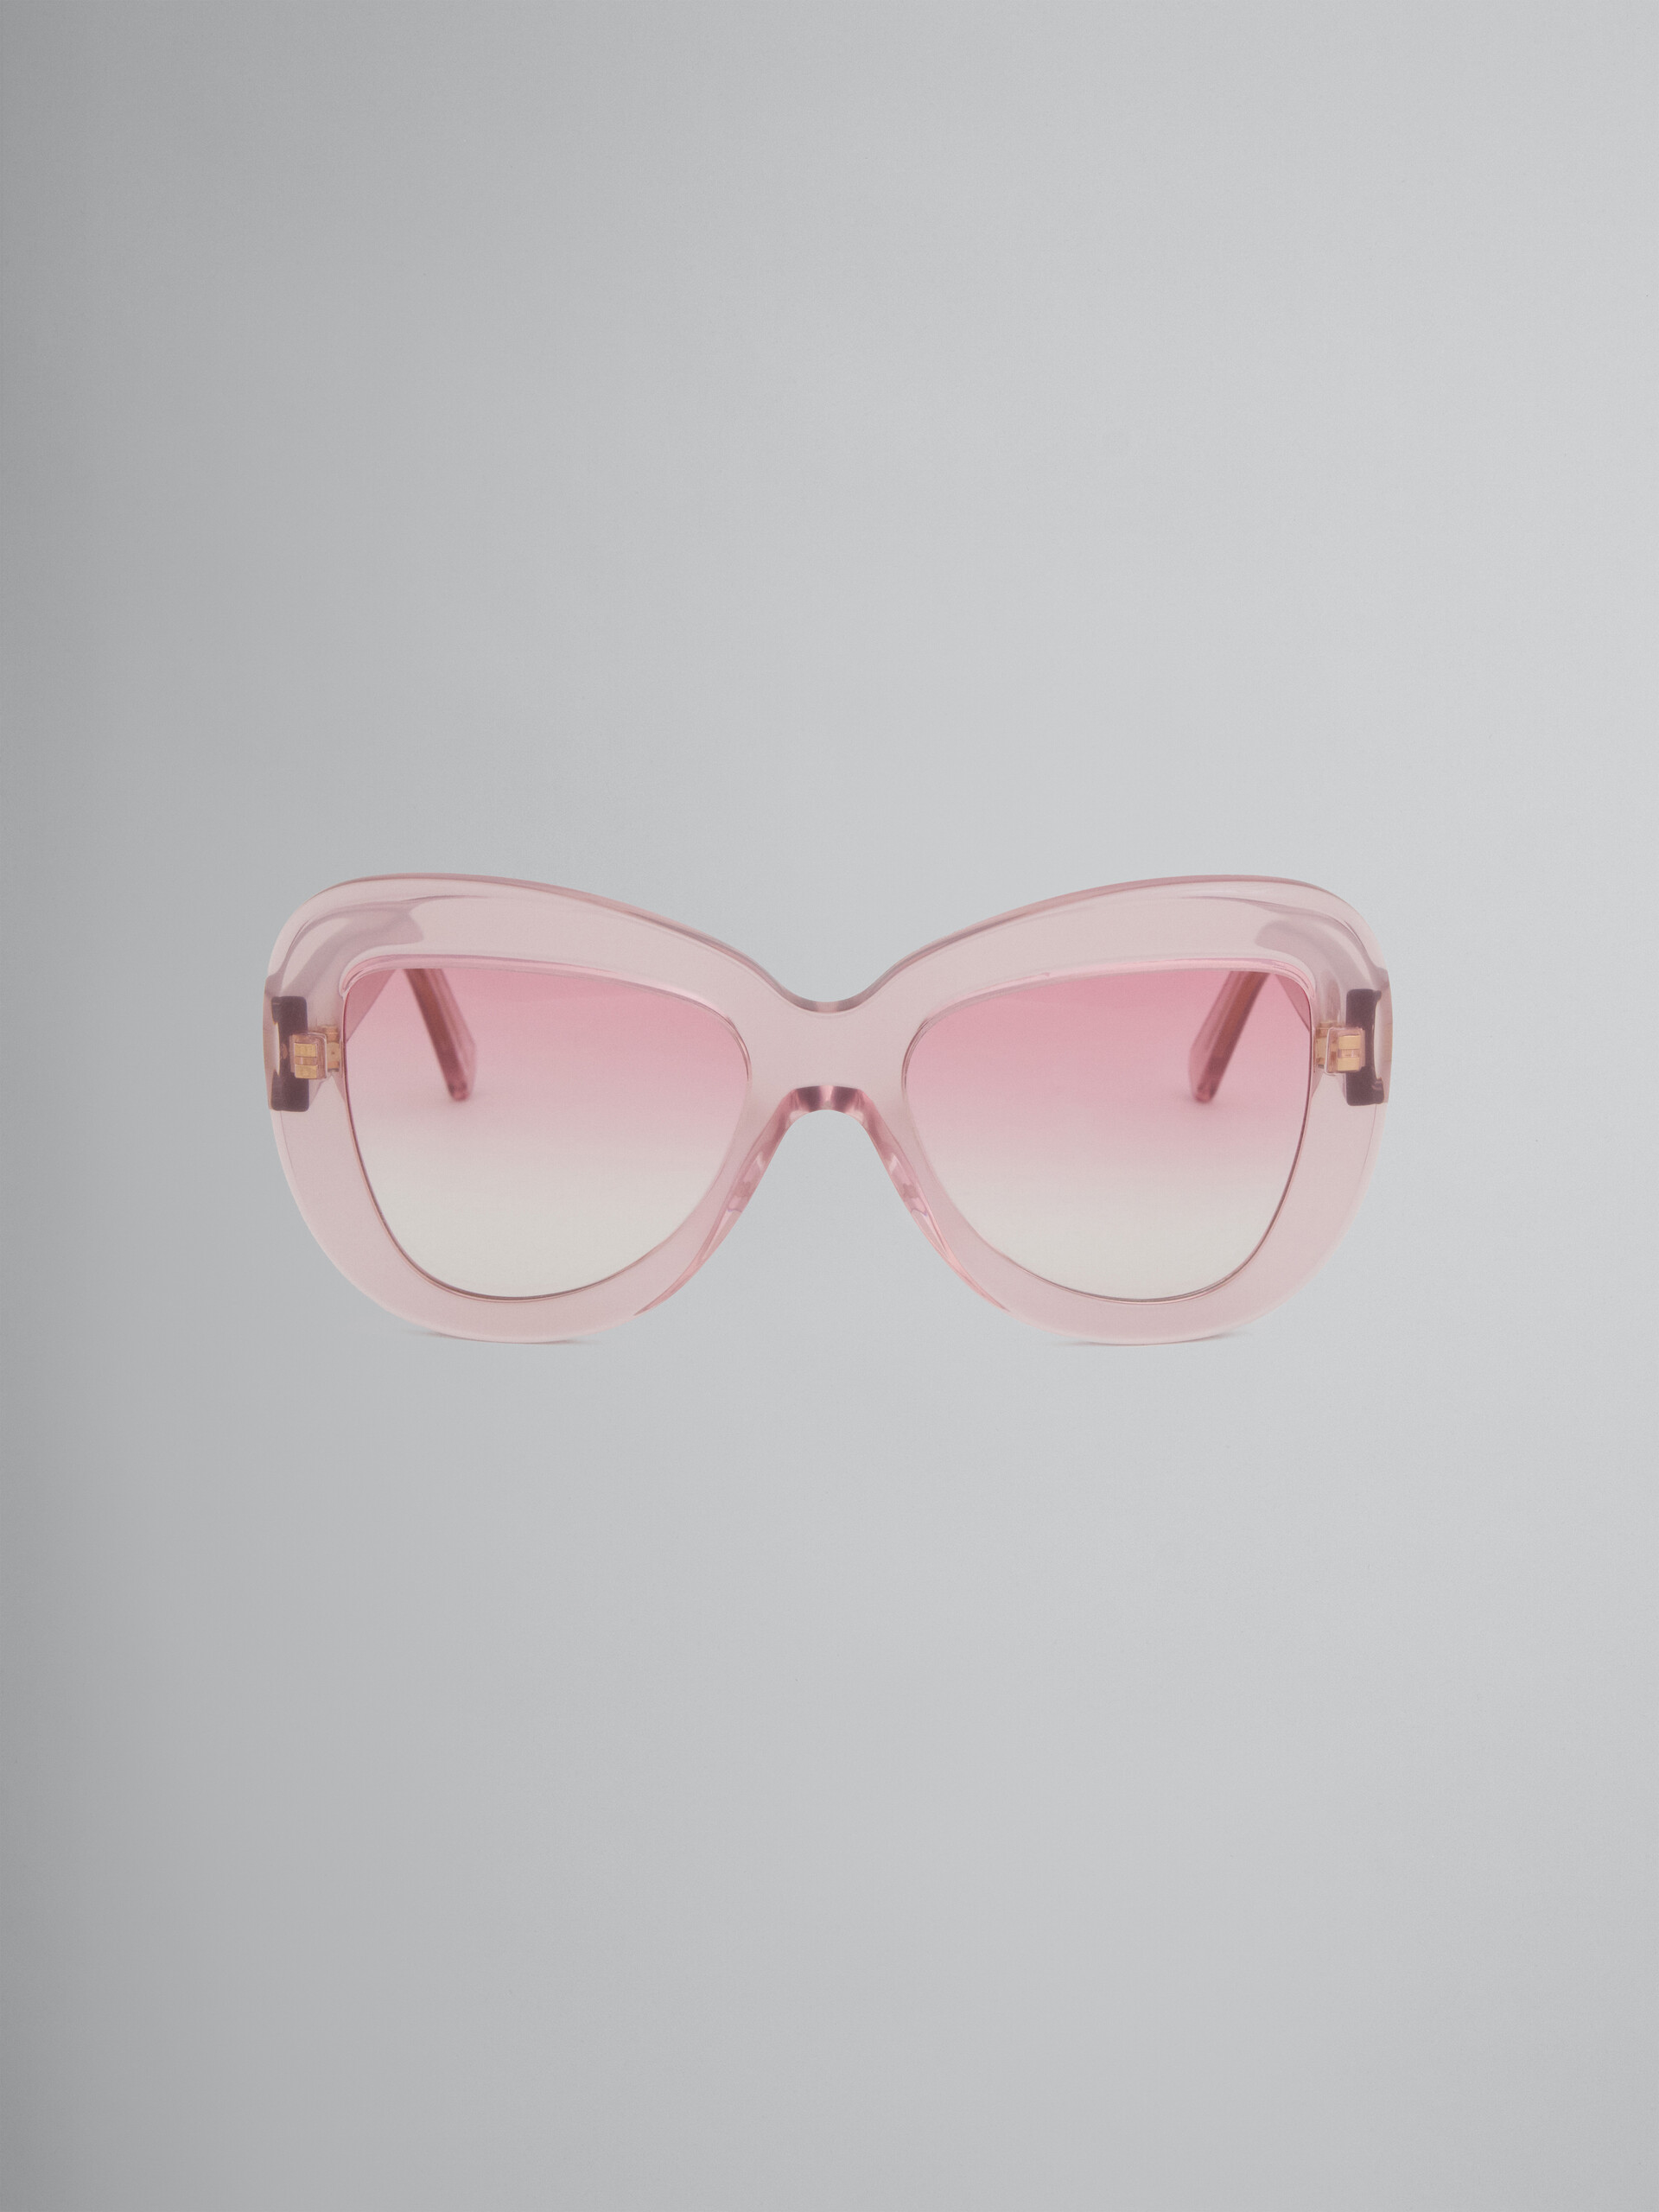 Pink acetate ELEPHANT ISLAND sunglasses - Optical - Image 1